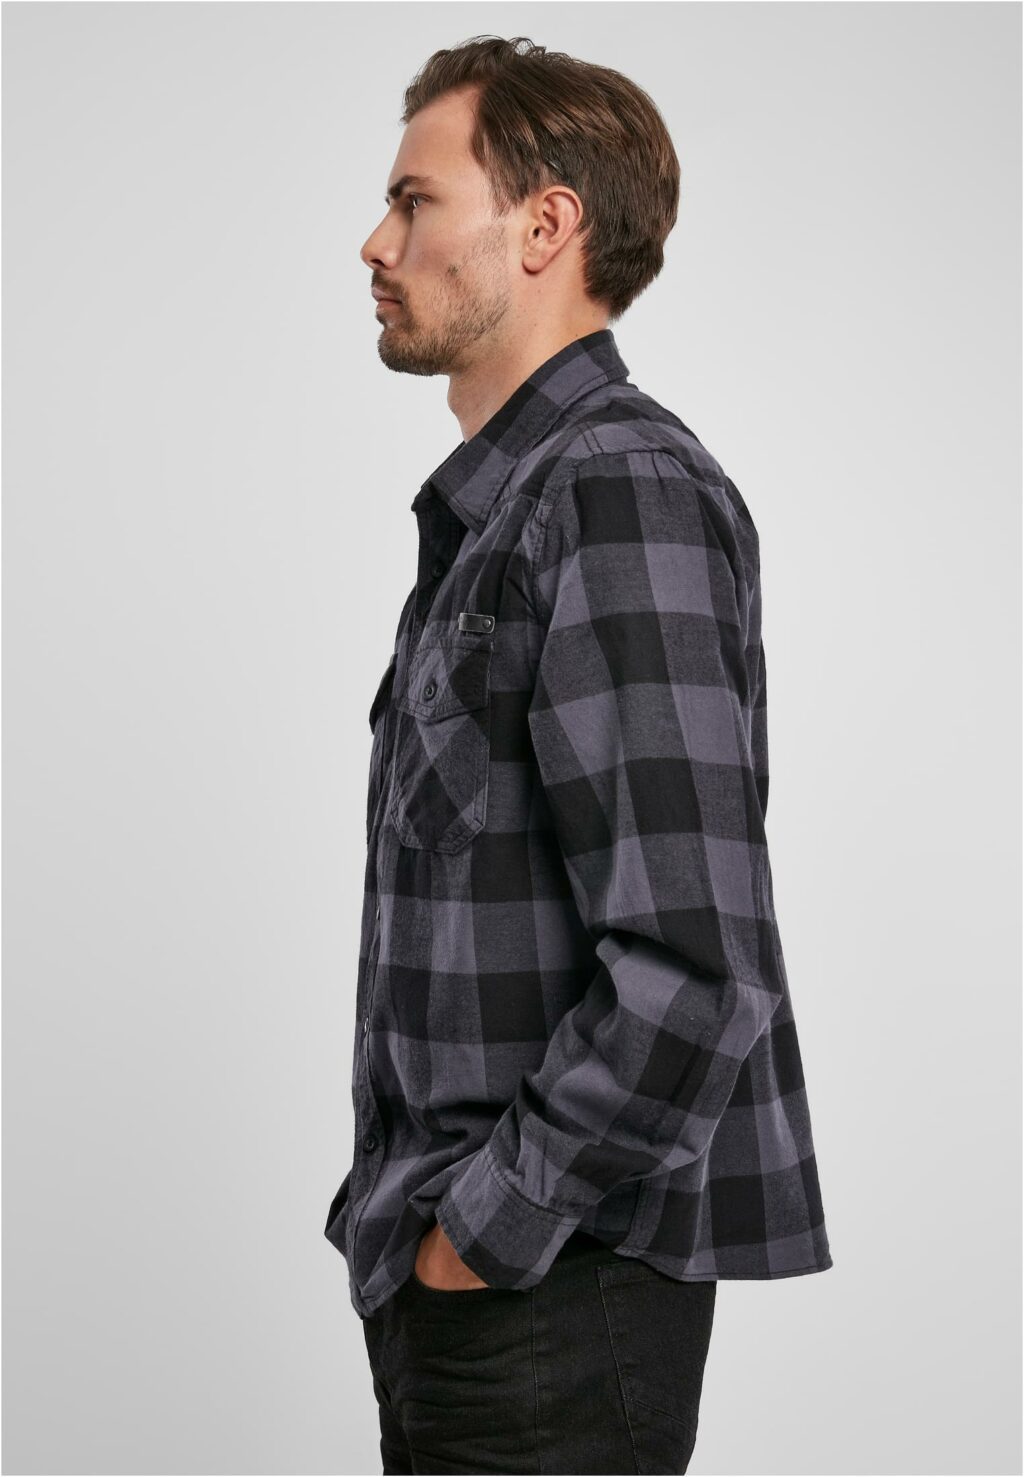 Brandit Checked Shirt black/grey BD4002